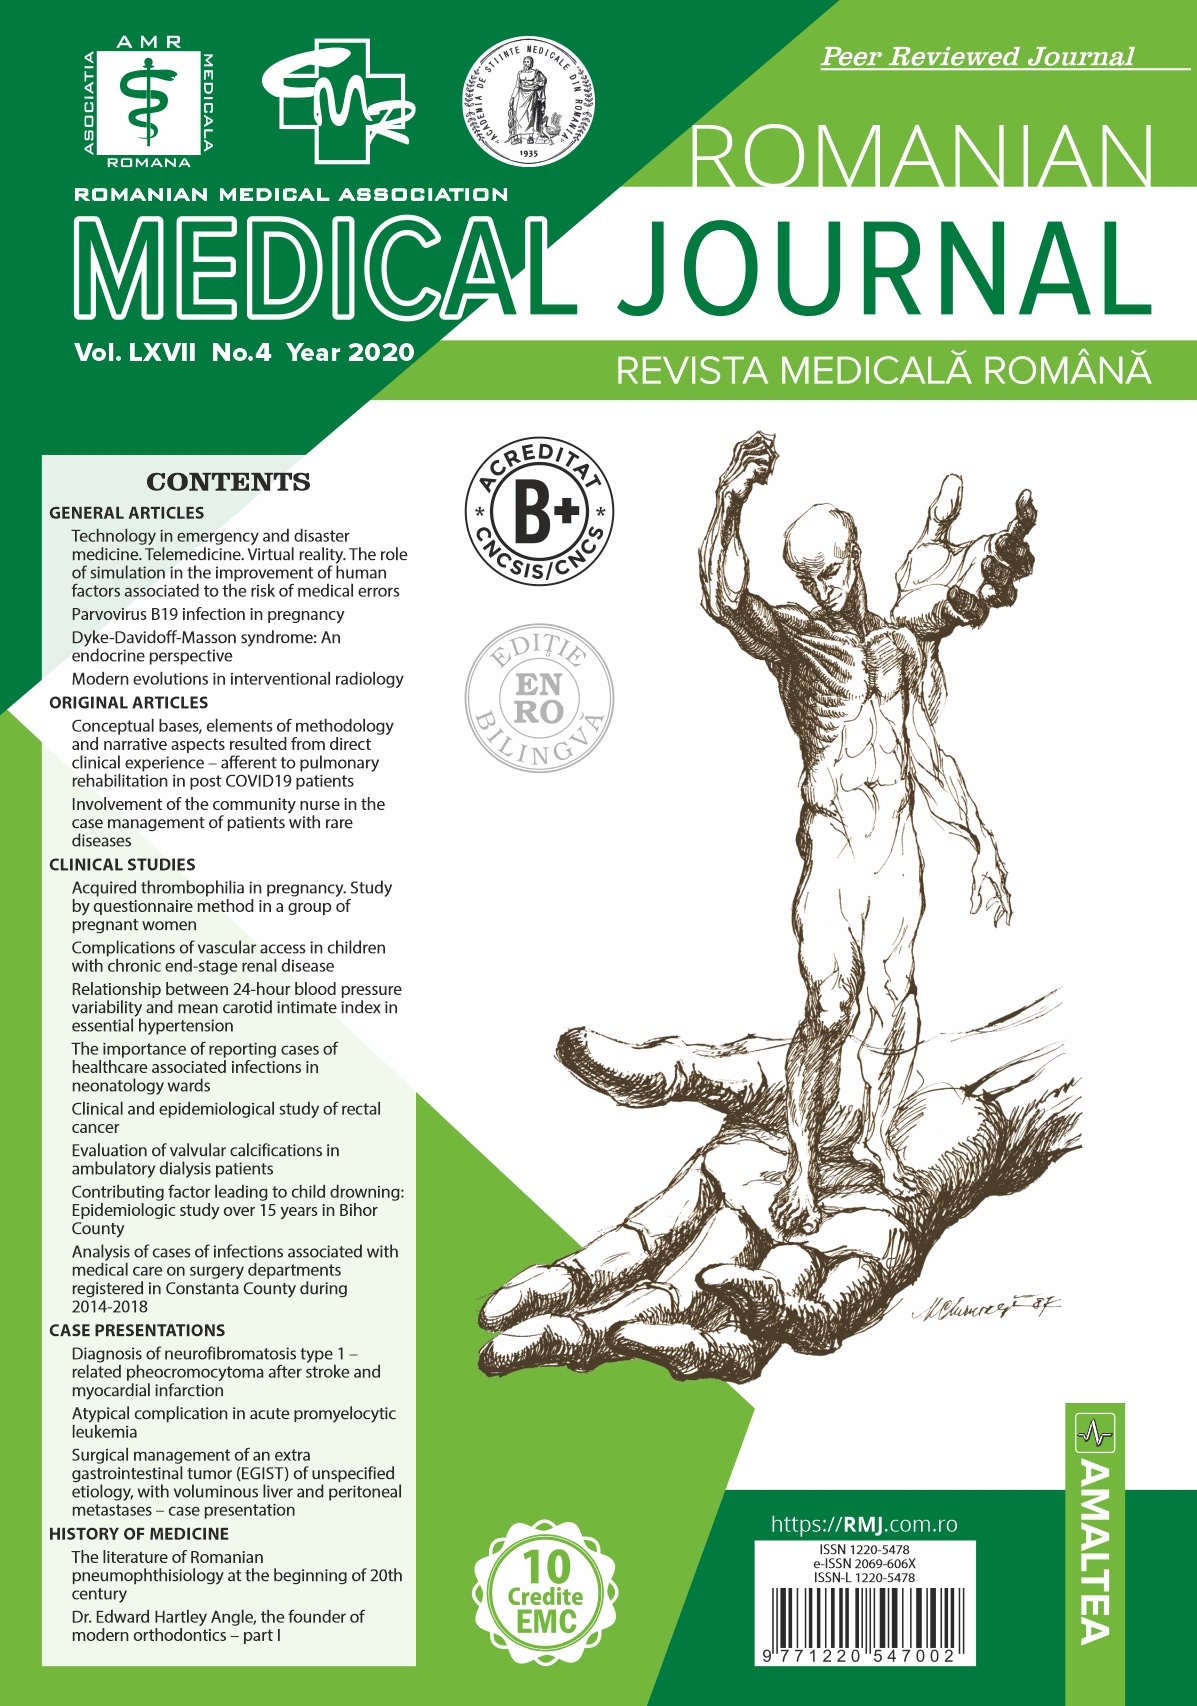 Romanian Medical Journal - REVISTA MEDICALA ROMANA, Vol. LXVII, No. 4, Year 2020